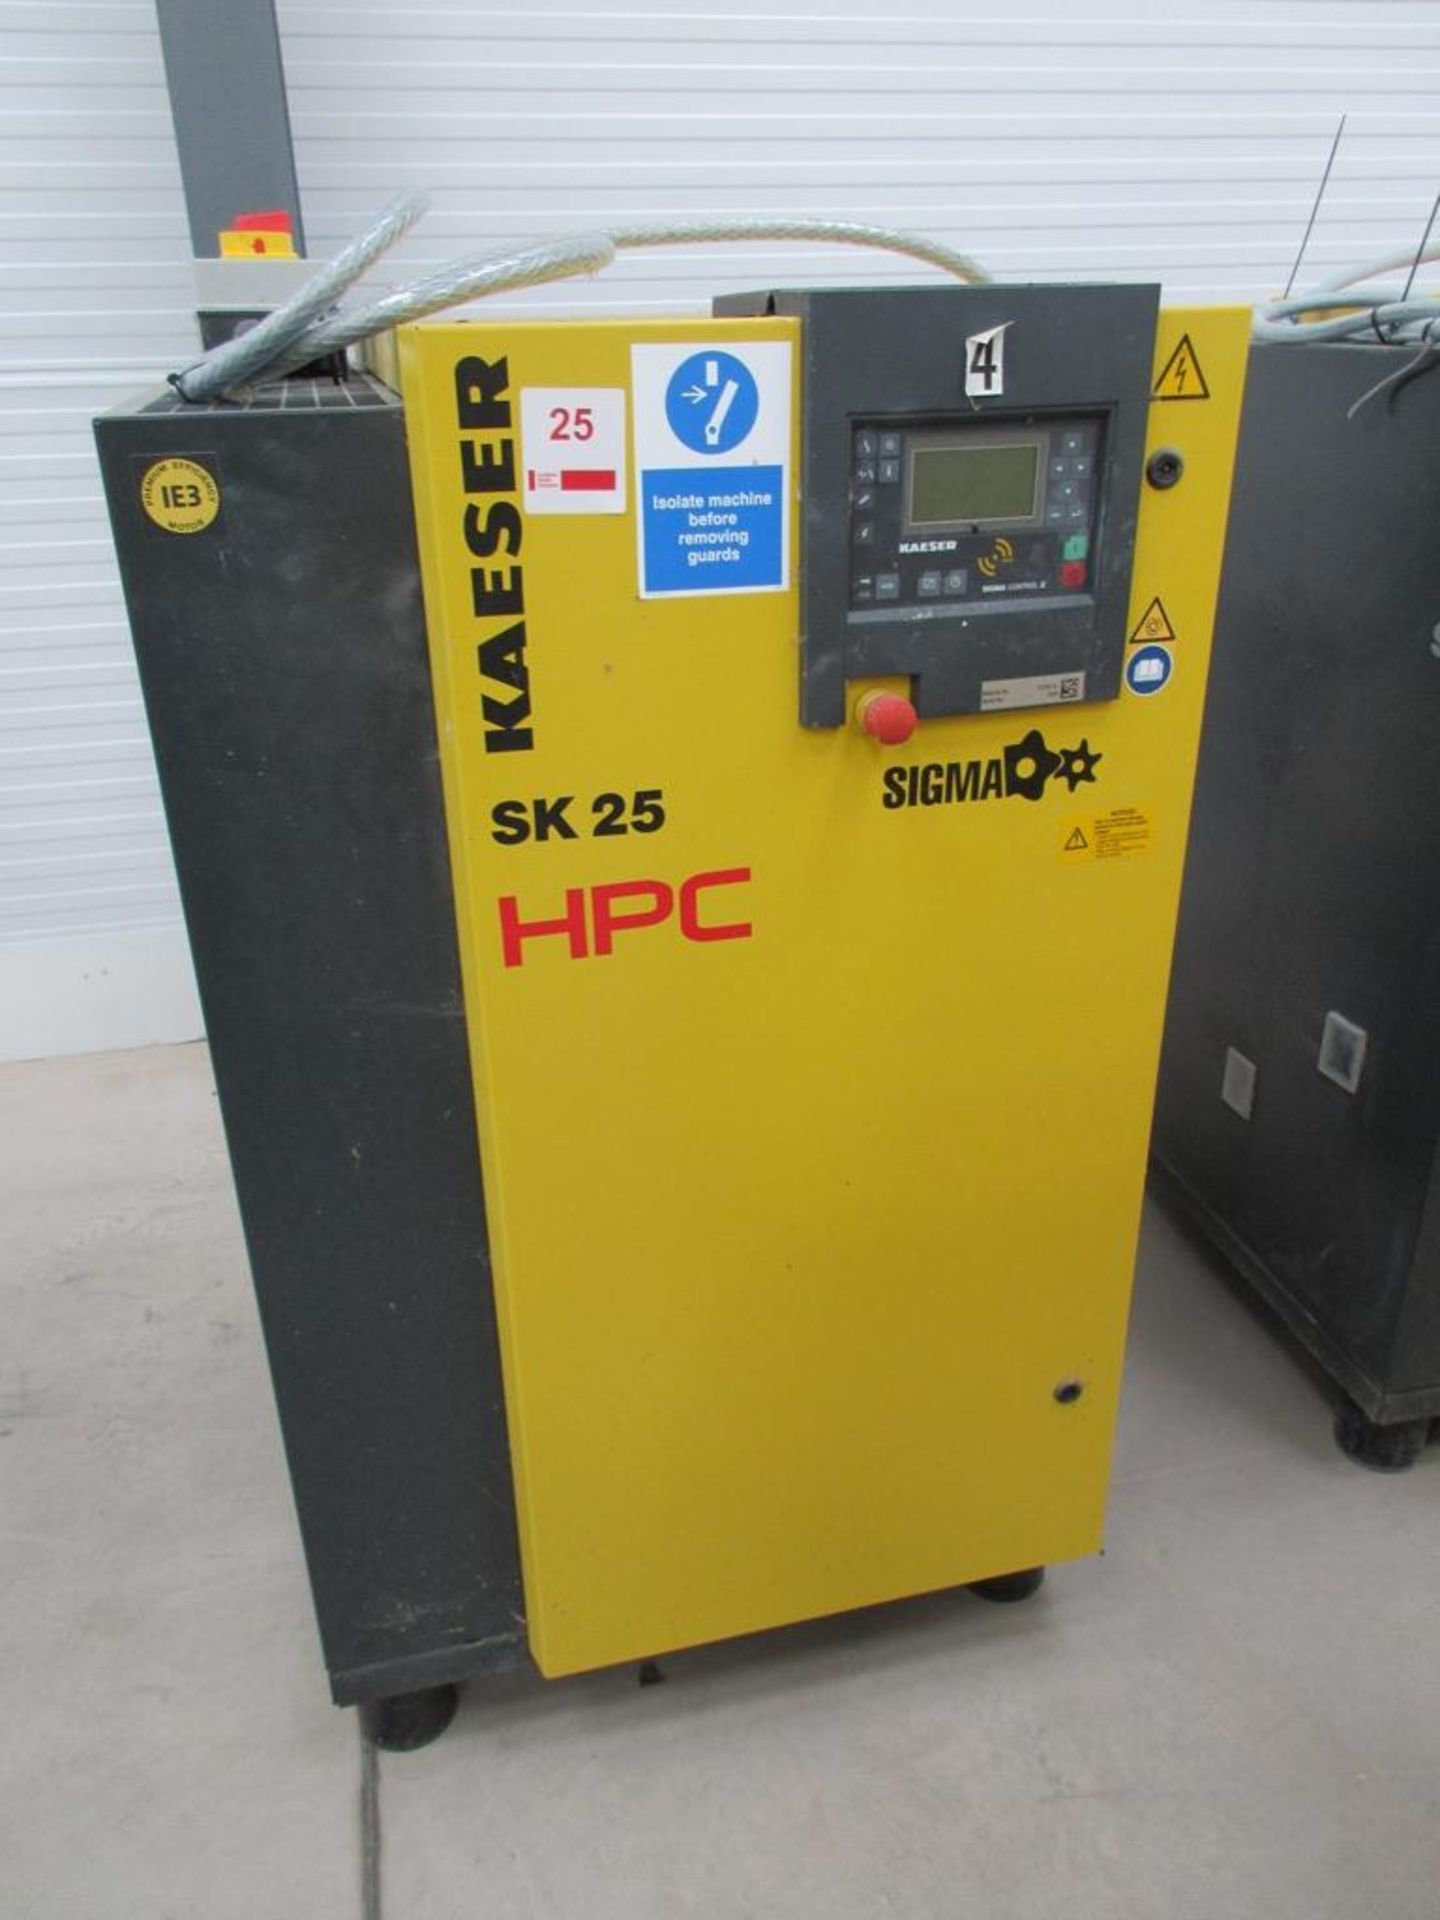 HPC Kaeser SK25 Sigma packaged screw compressor, serial no. 2026-7530050 (2020)